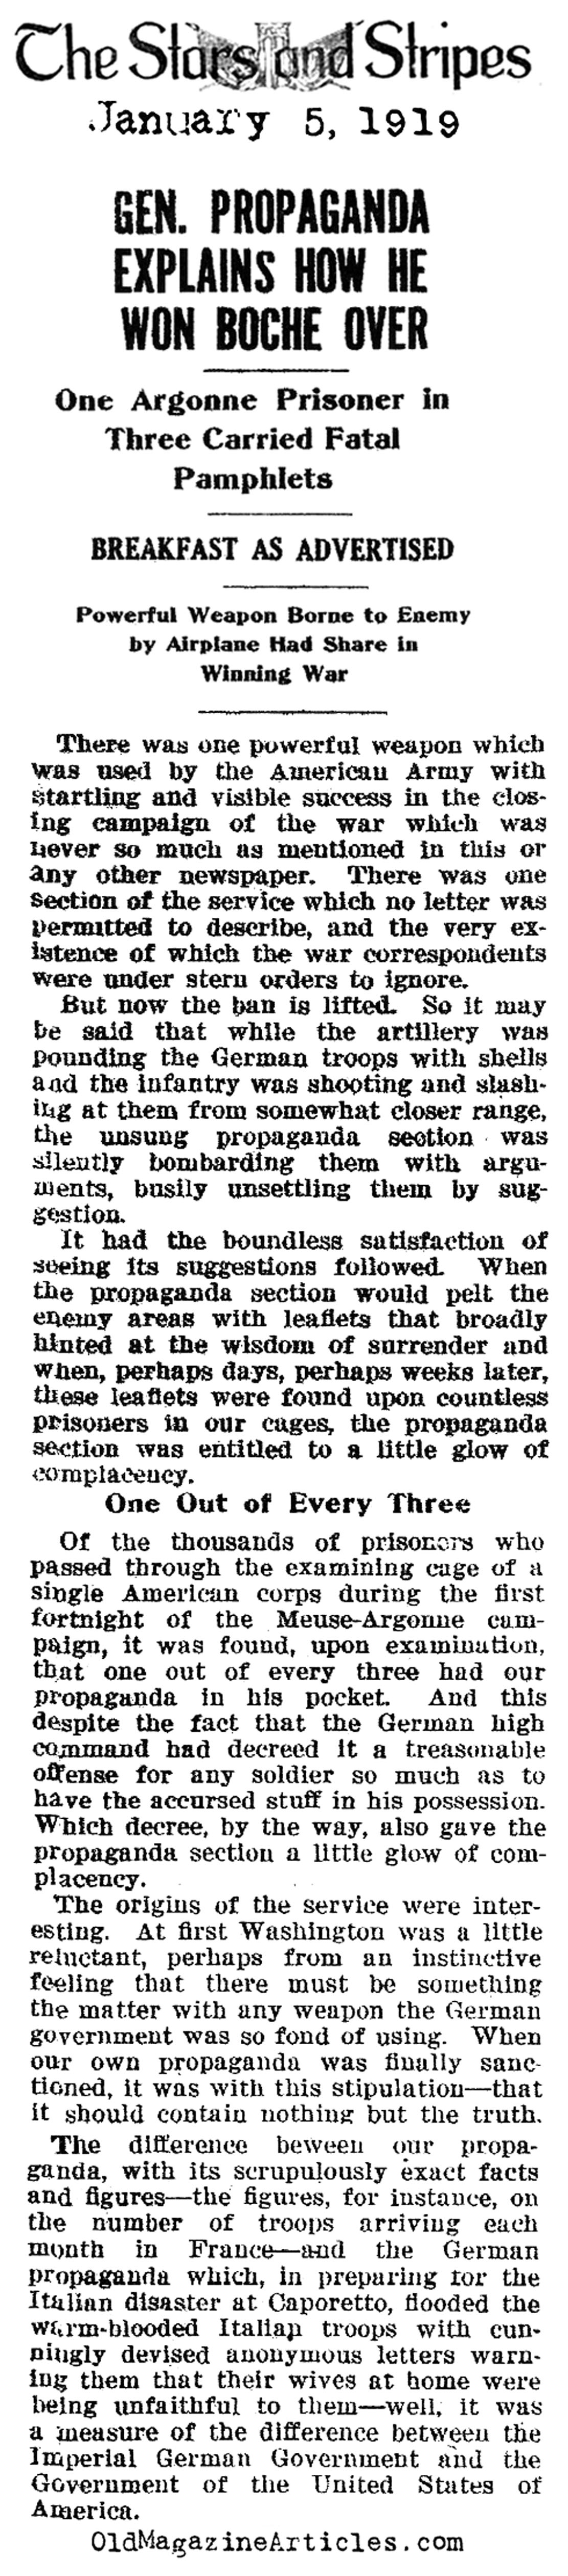 U.S. Propaganda Pamphlets Dropped on the Hun (The Stars and Stripes, 1919)